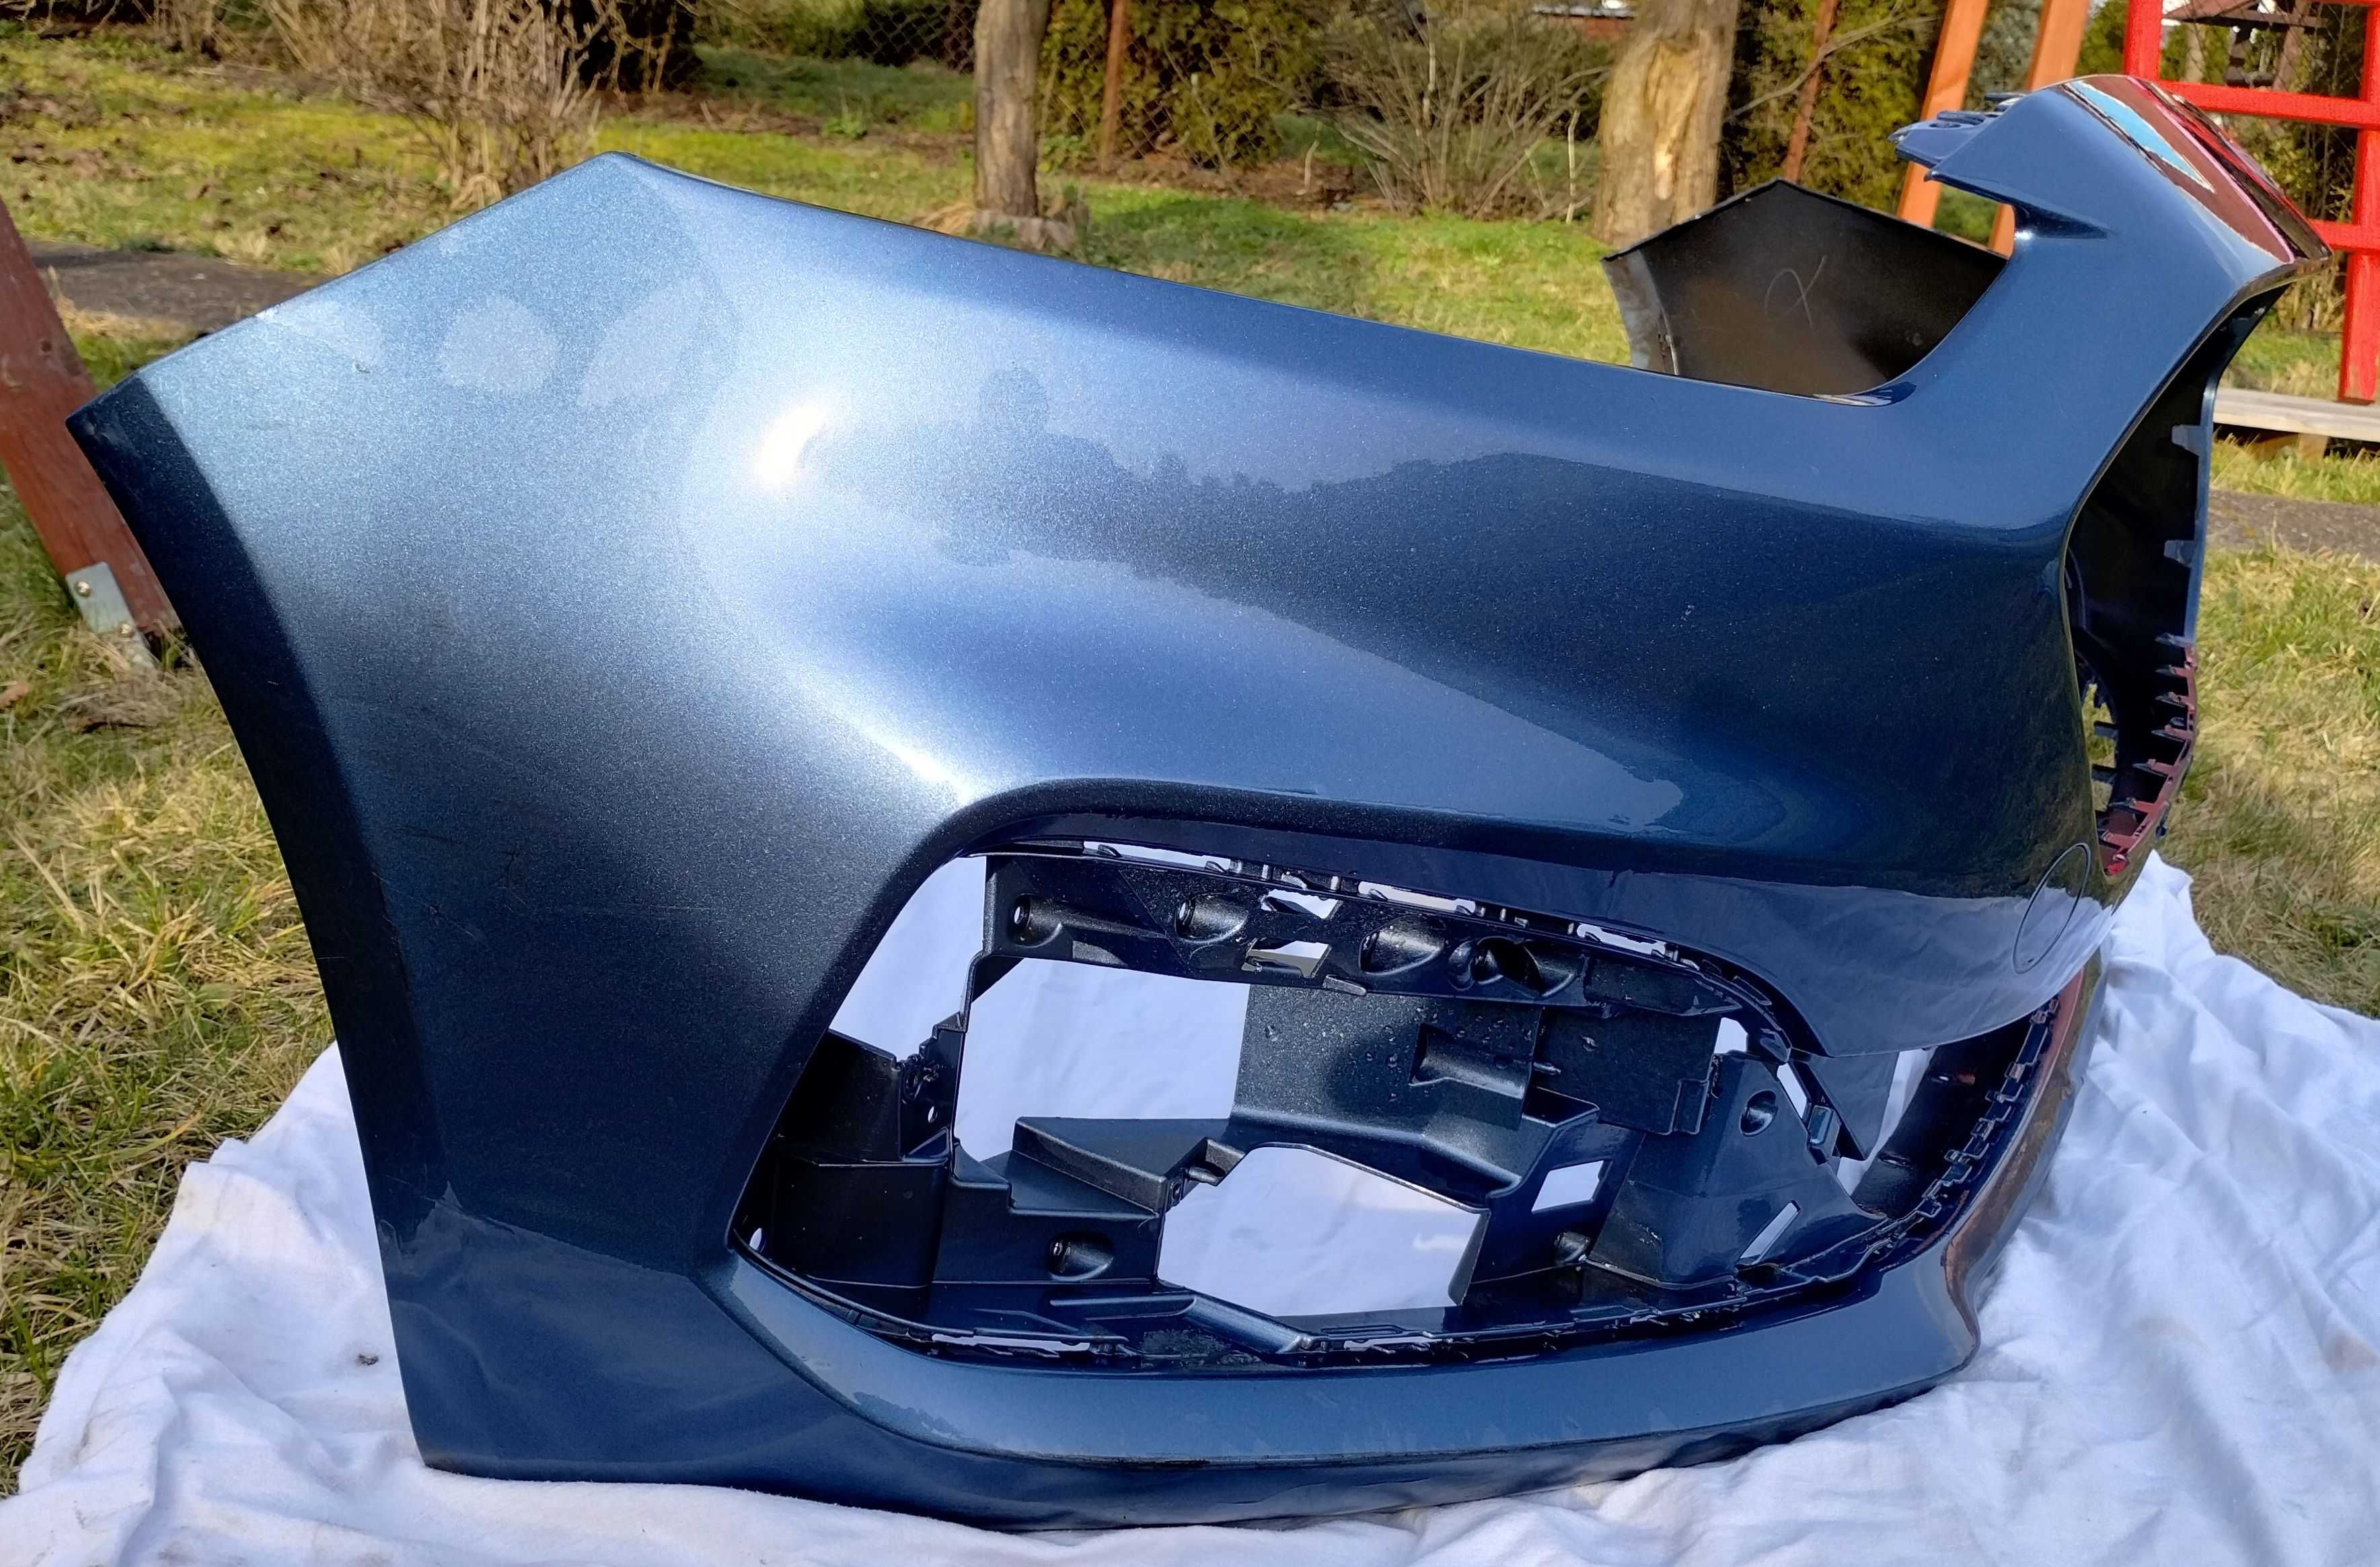 Zderzak przedni 2019 Ford Mondeo MK5, kolor chrome blue, po lifcie